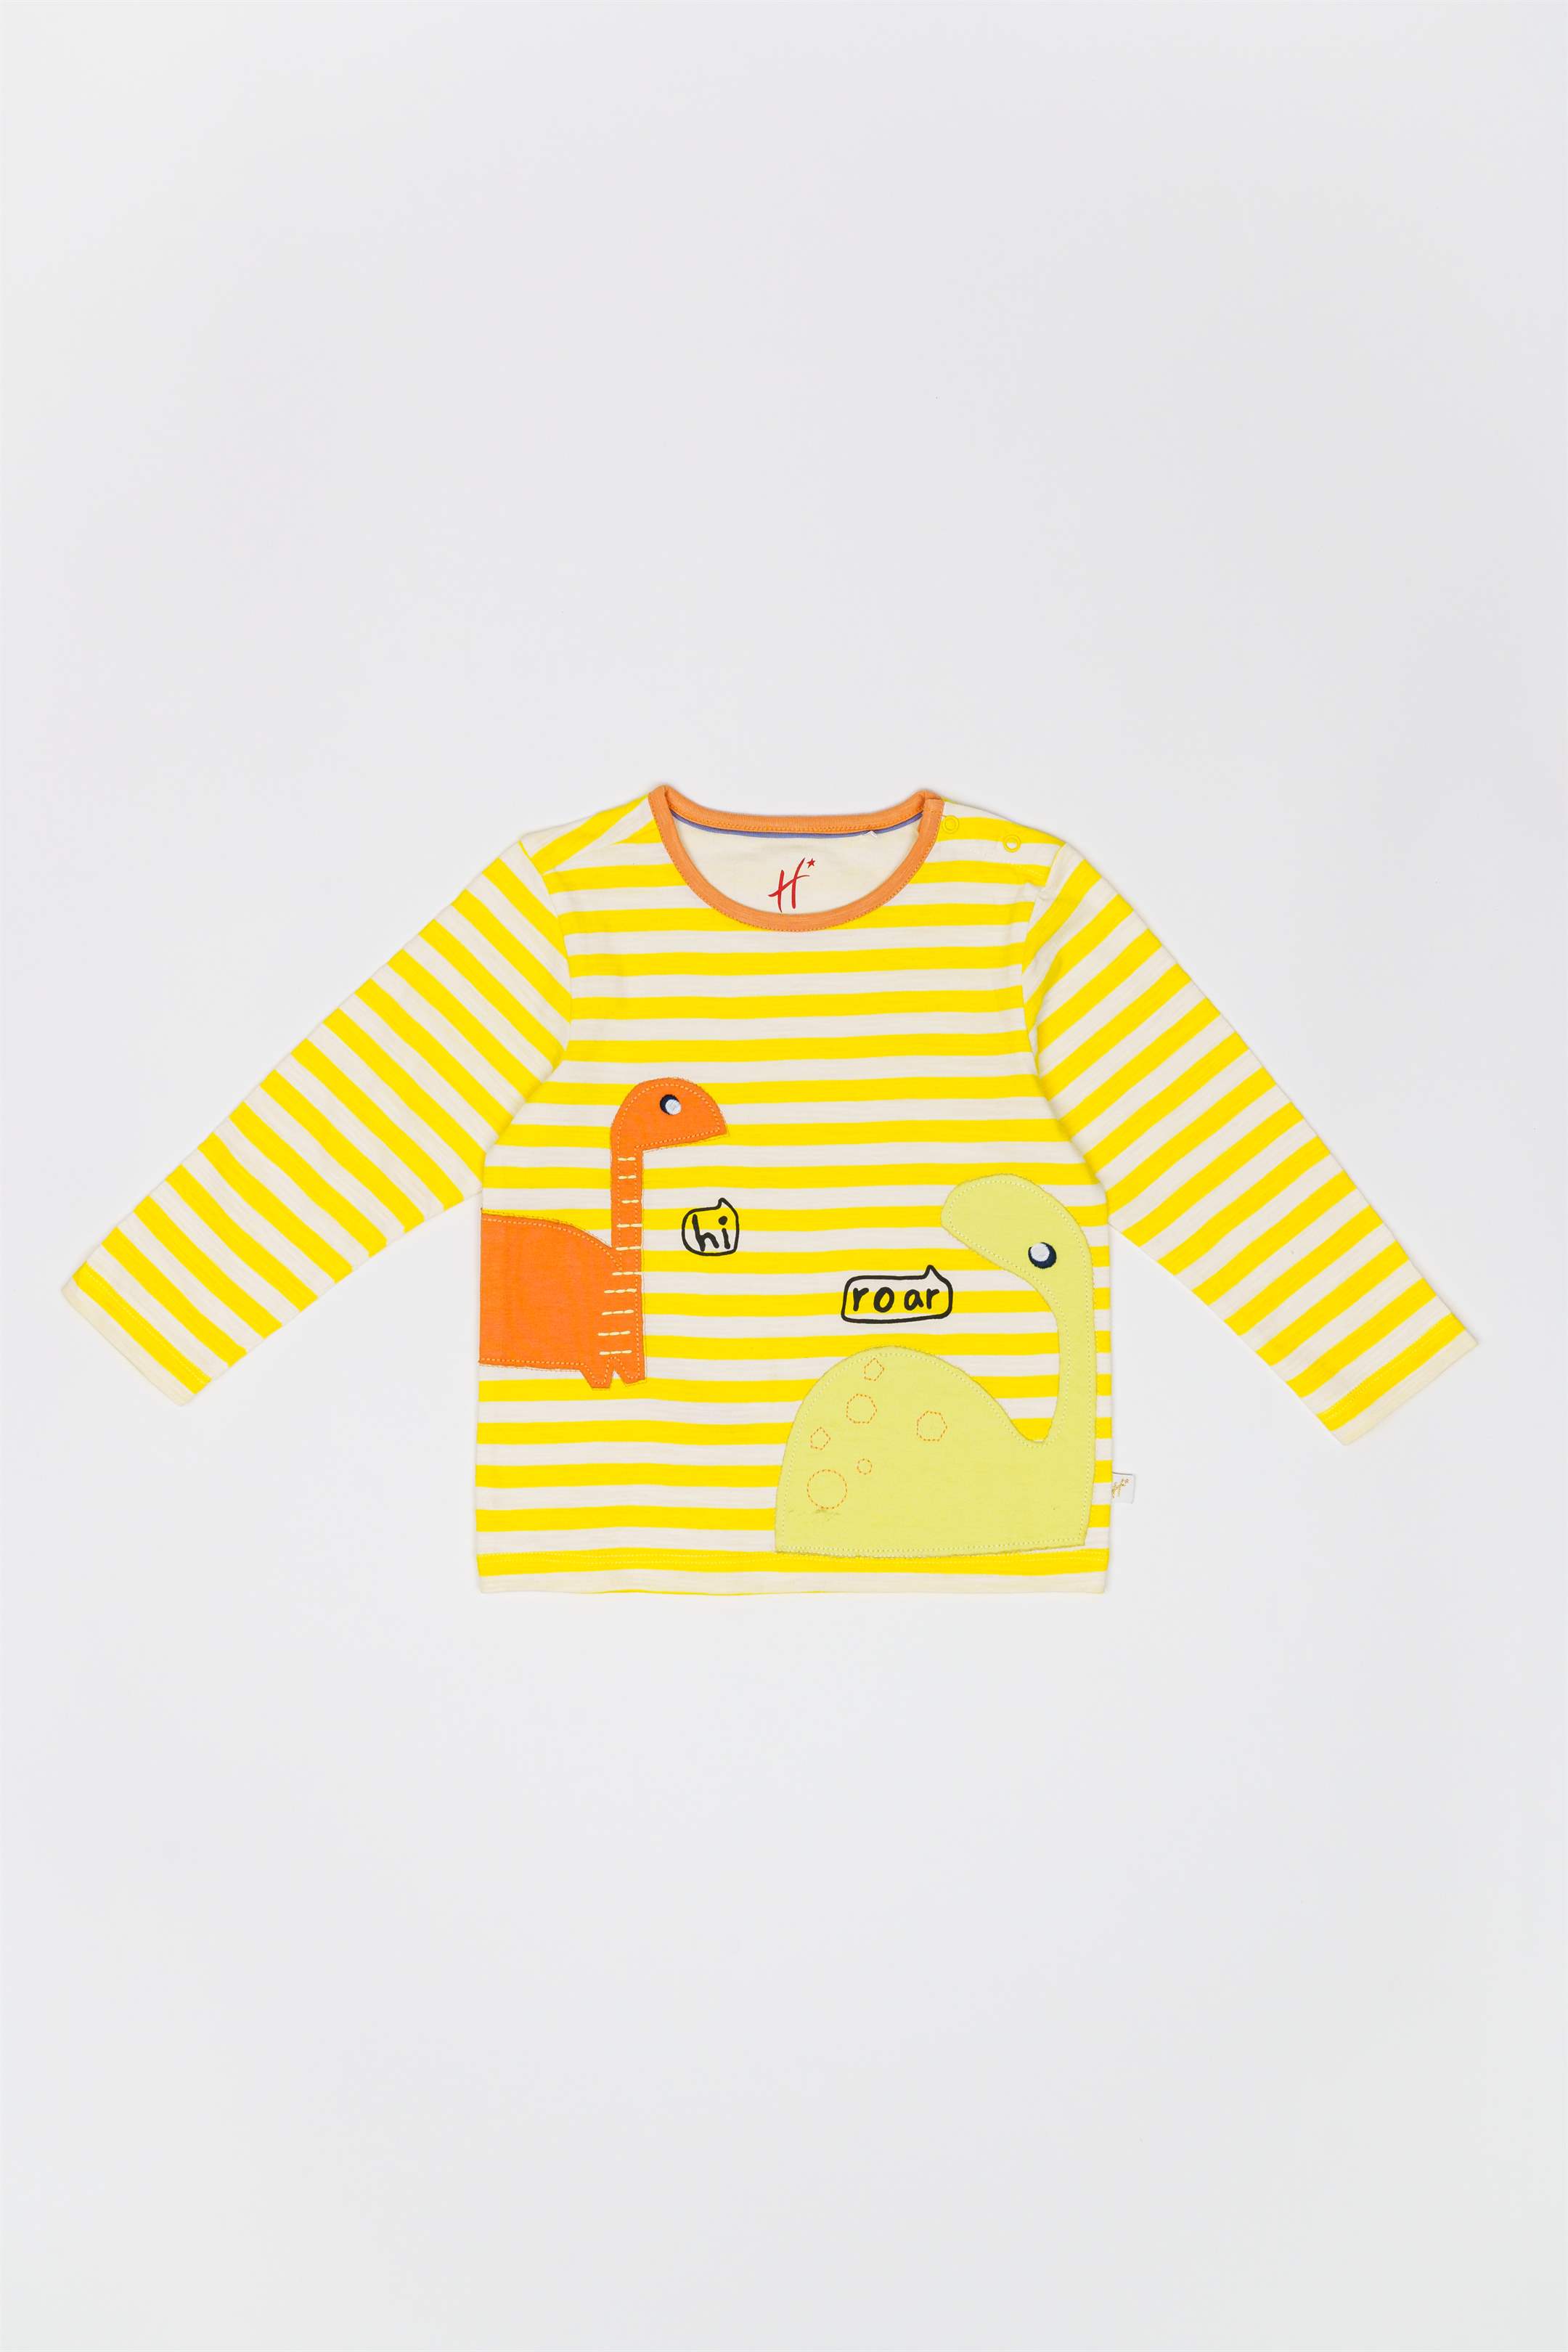 H by Hamleys Infant Boys Striped Yellow T-Shirt